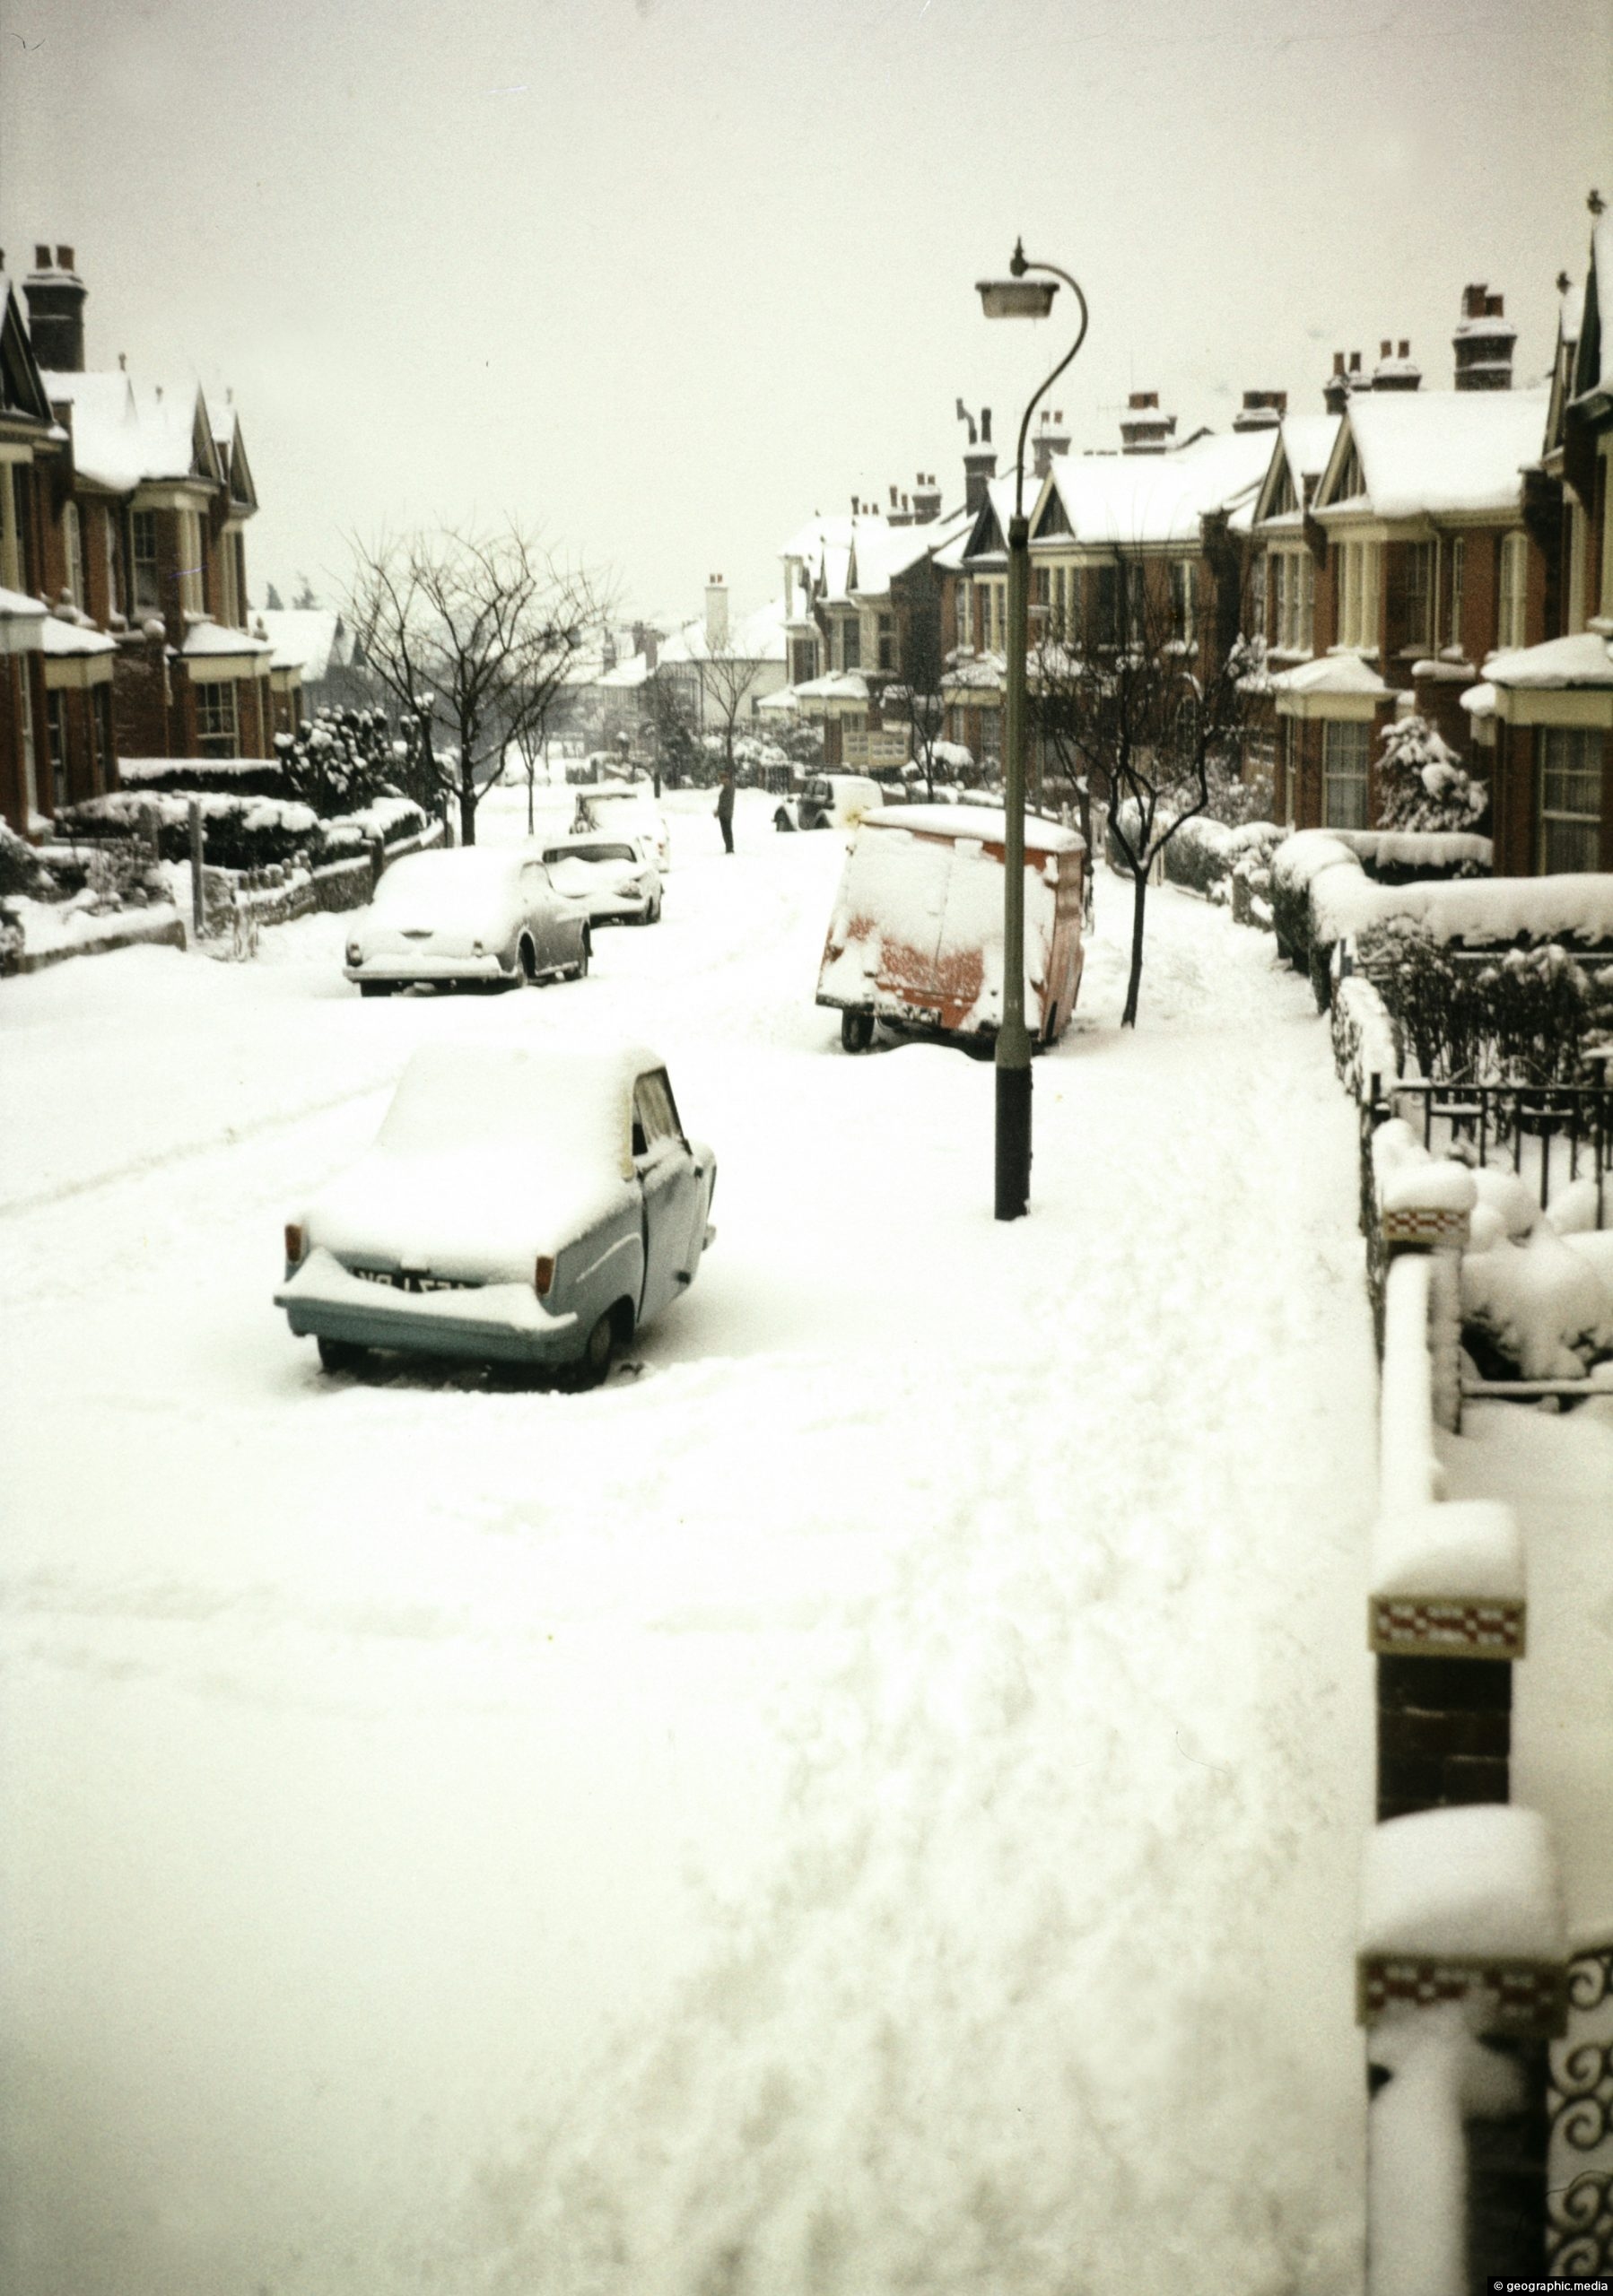 Snow covered London street